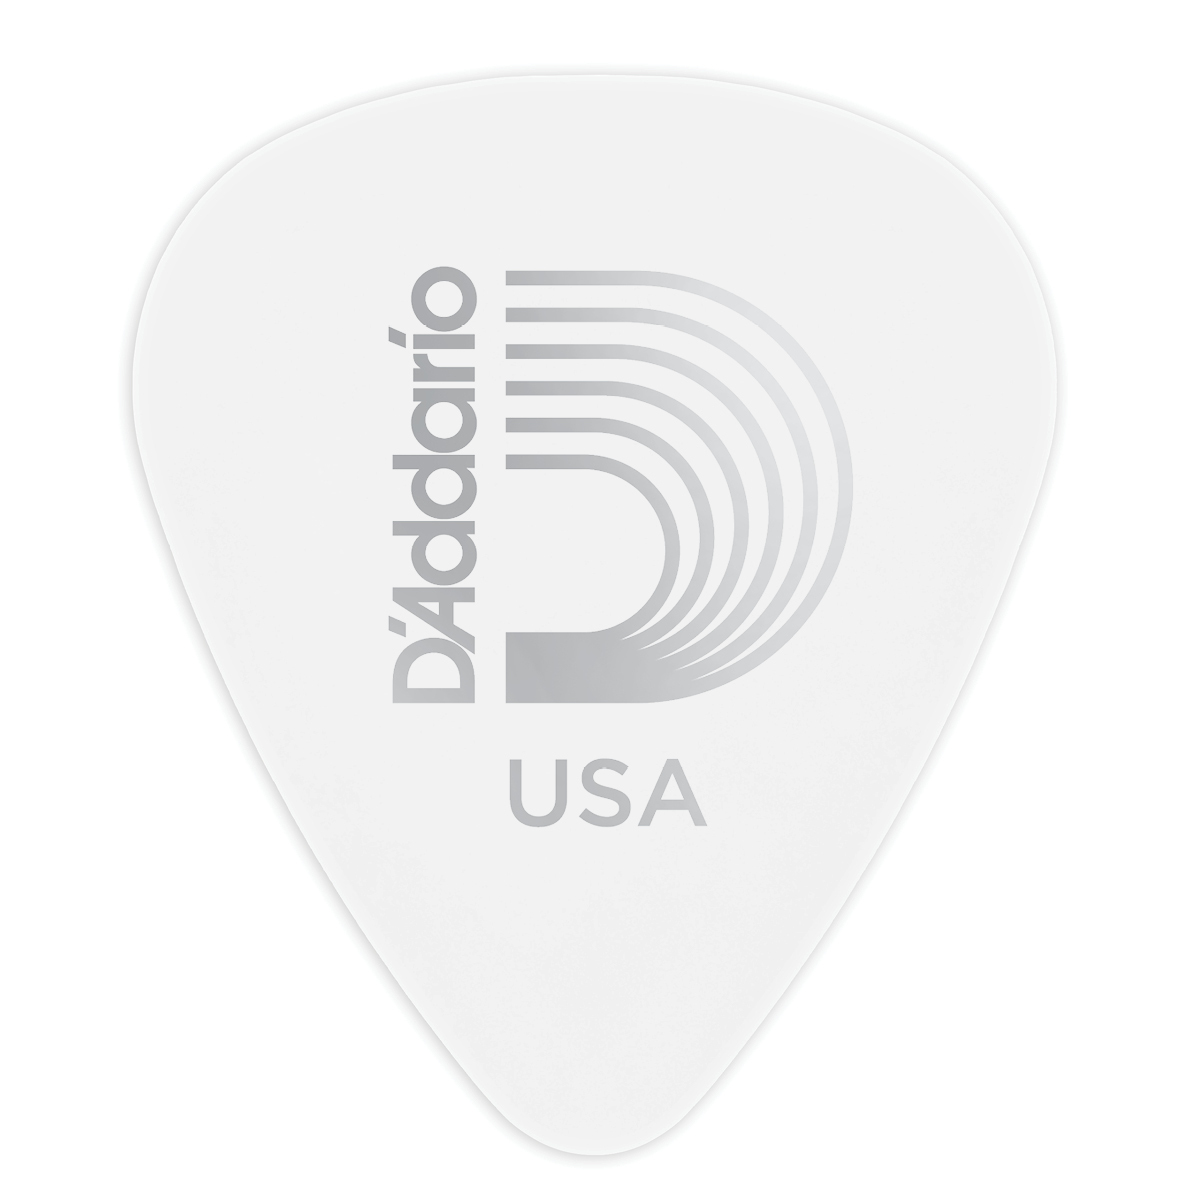 D'Addario White-Color Celluloid Guitar Pick, Light